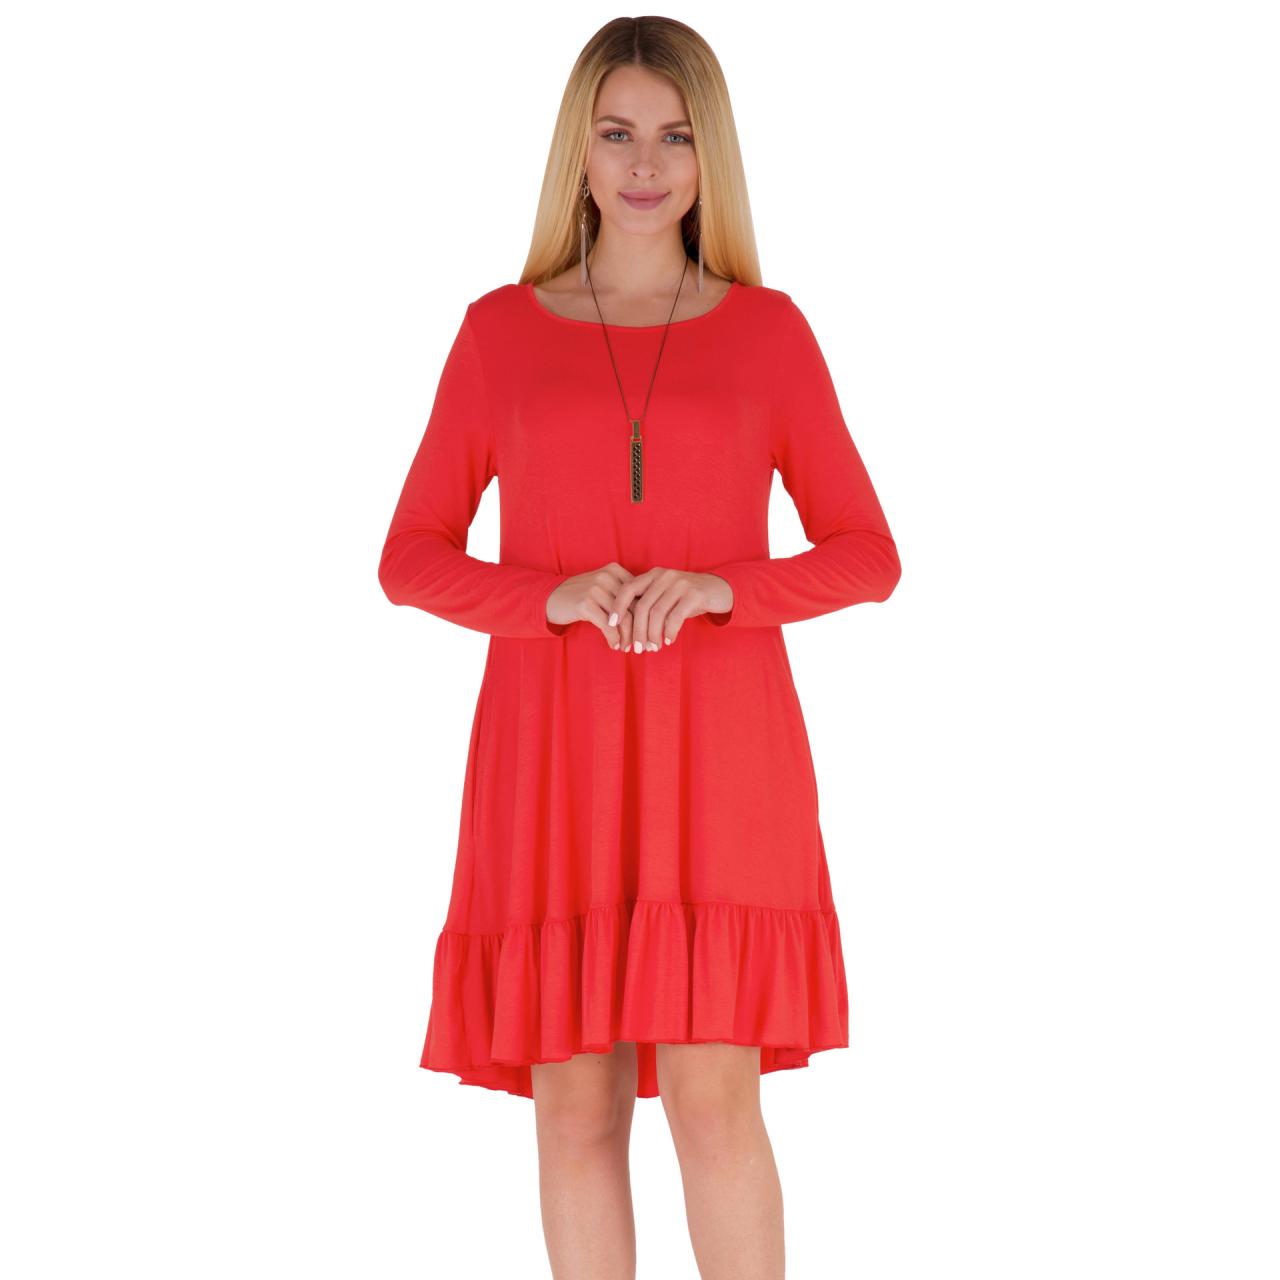 Women Ruffles Casual Dress Autumn Long Sleeve A Line Loose Pocket Female Short Mini Party Dress red